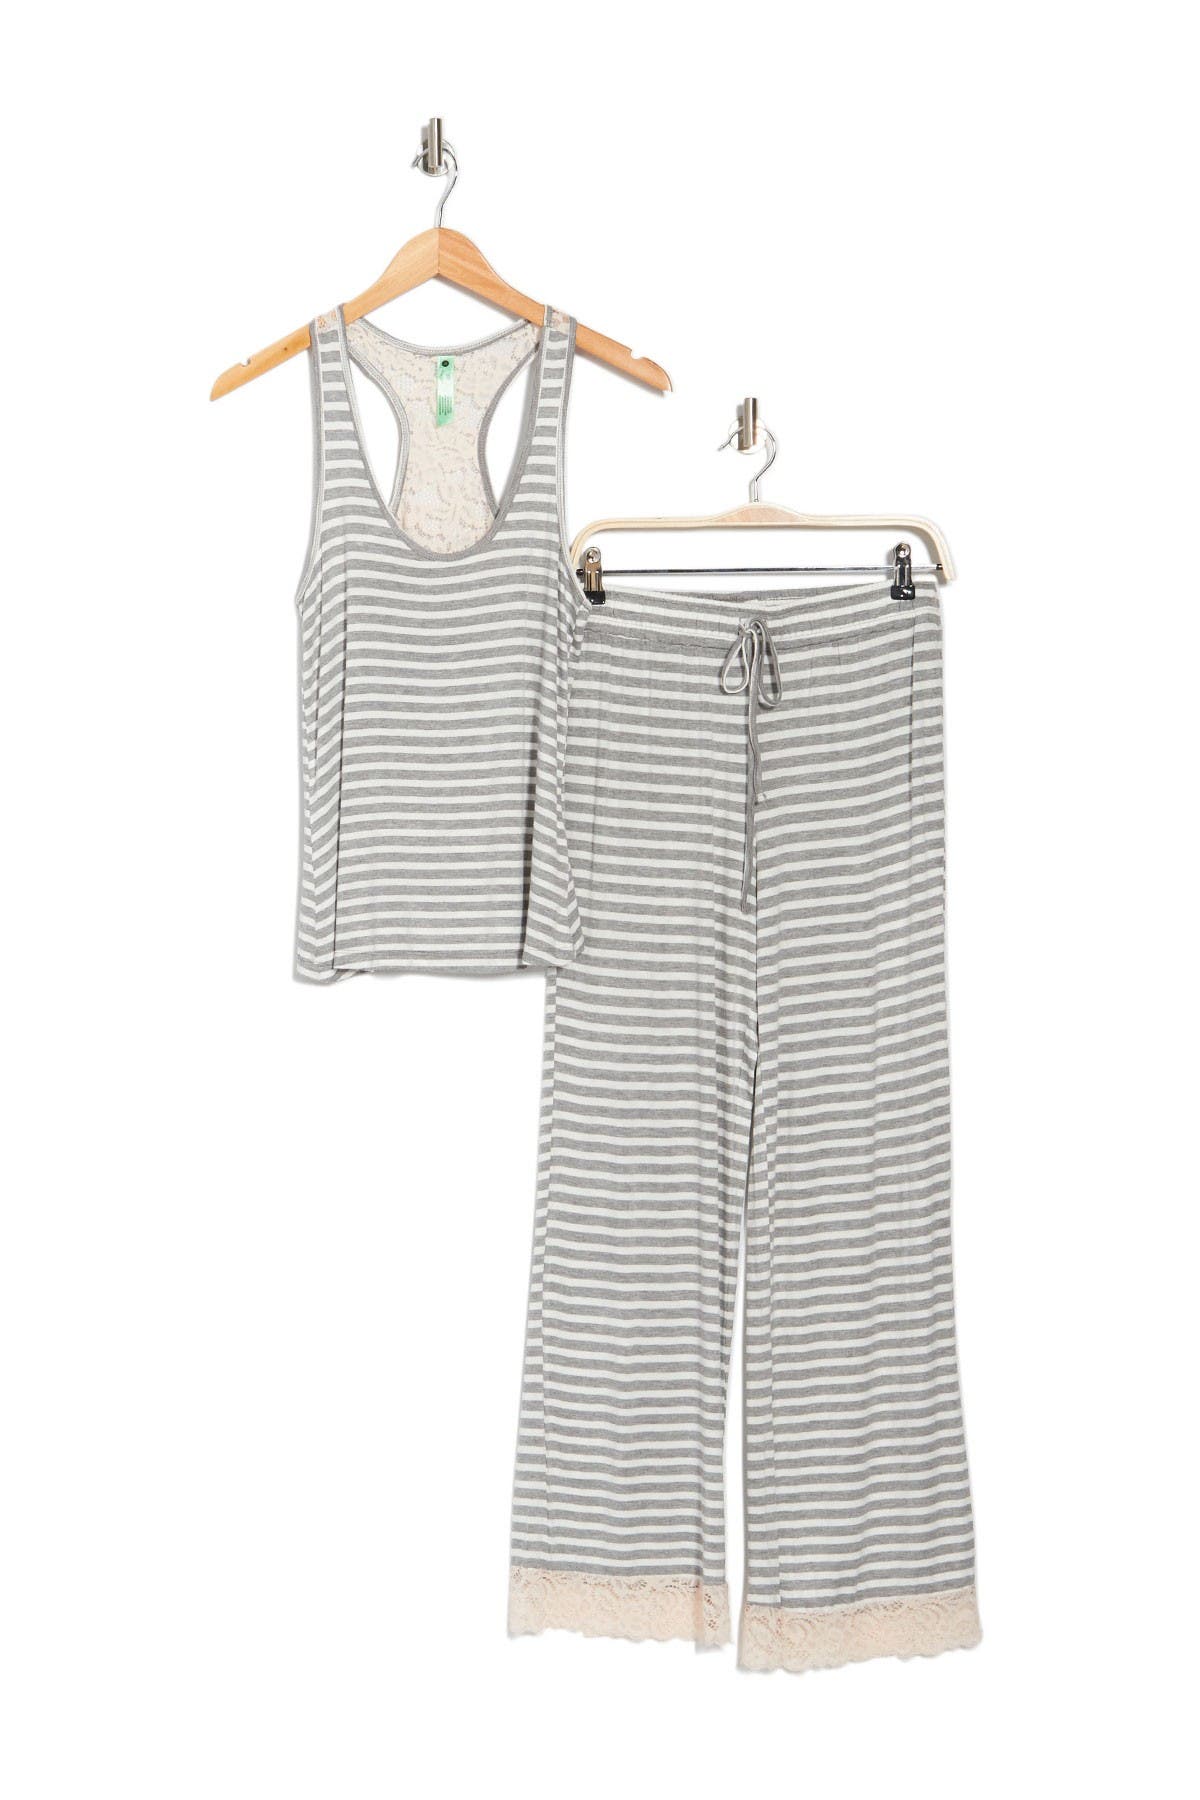 Honeydew Intimates Striped Lace Trim Tank & Pants 2-piece Pajama Set In Heathergreystripe